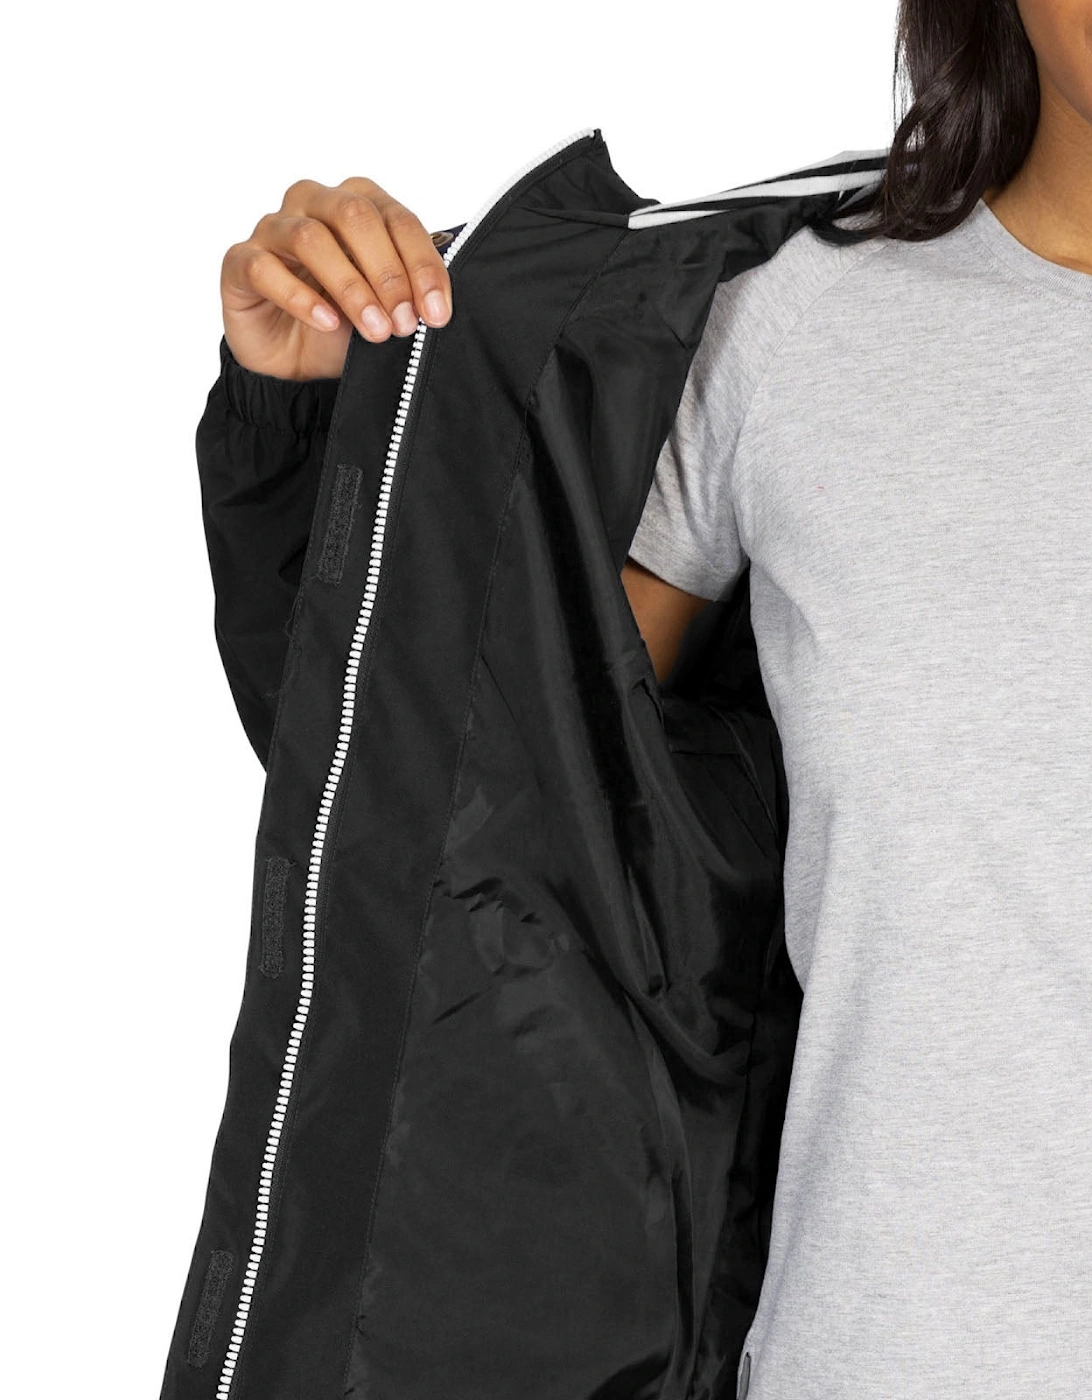 Womens Flourish Waterproof Hooded Jacket